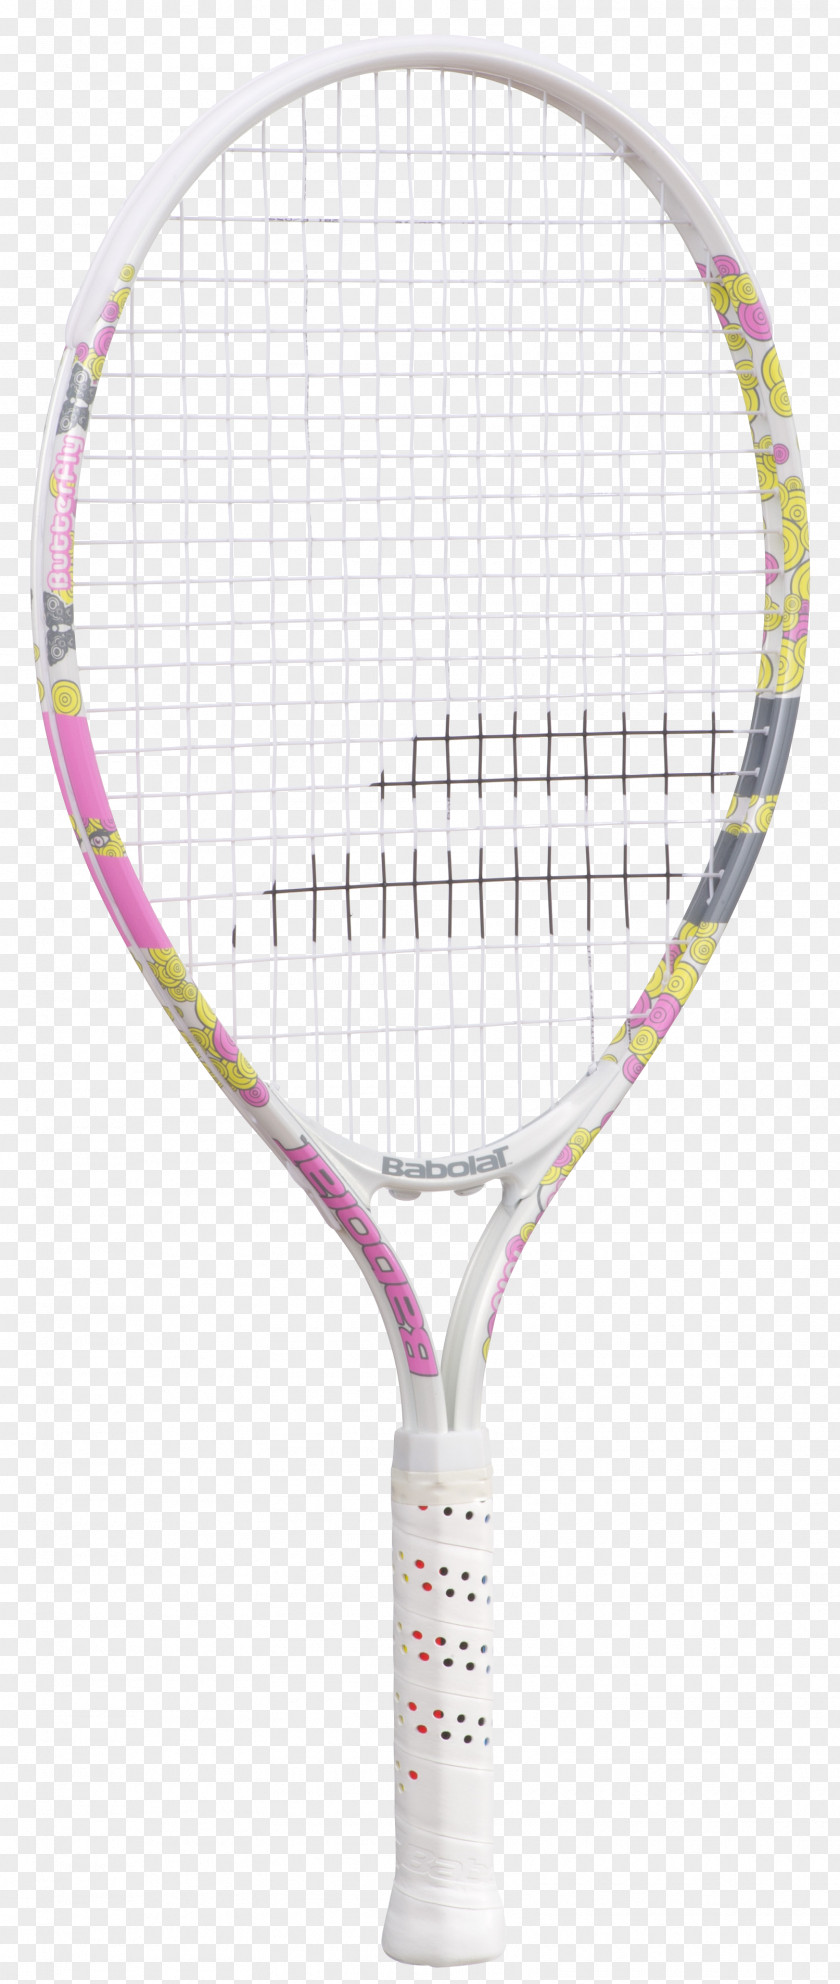 Butterfly Composition Racket Strings Babolat Rakieta Tenisowa Tennis PNG